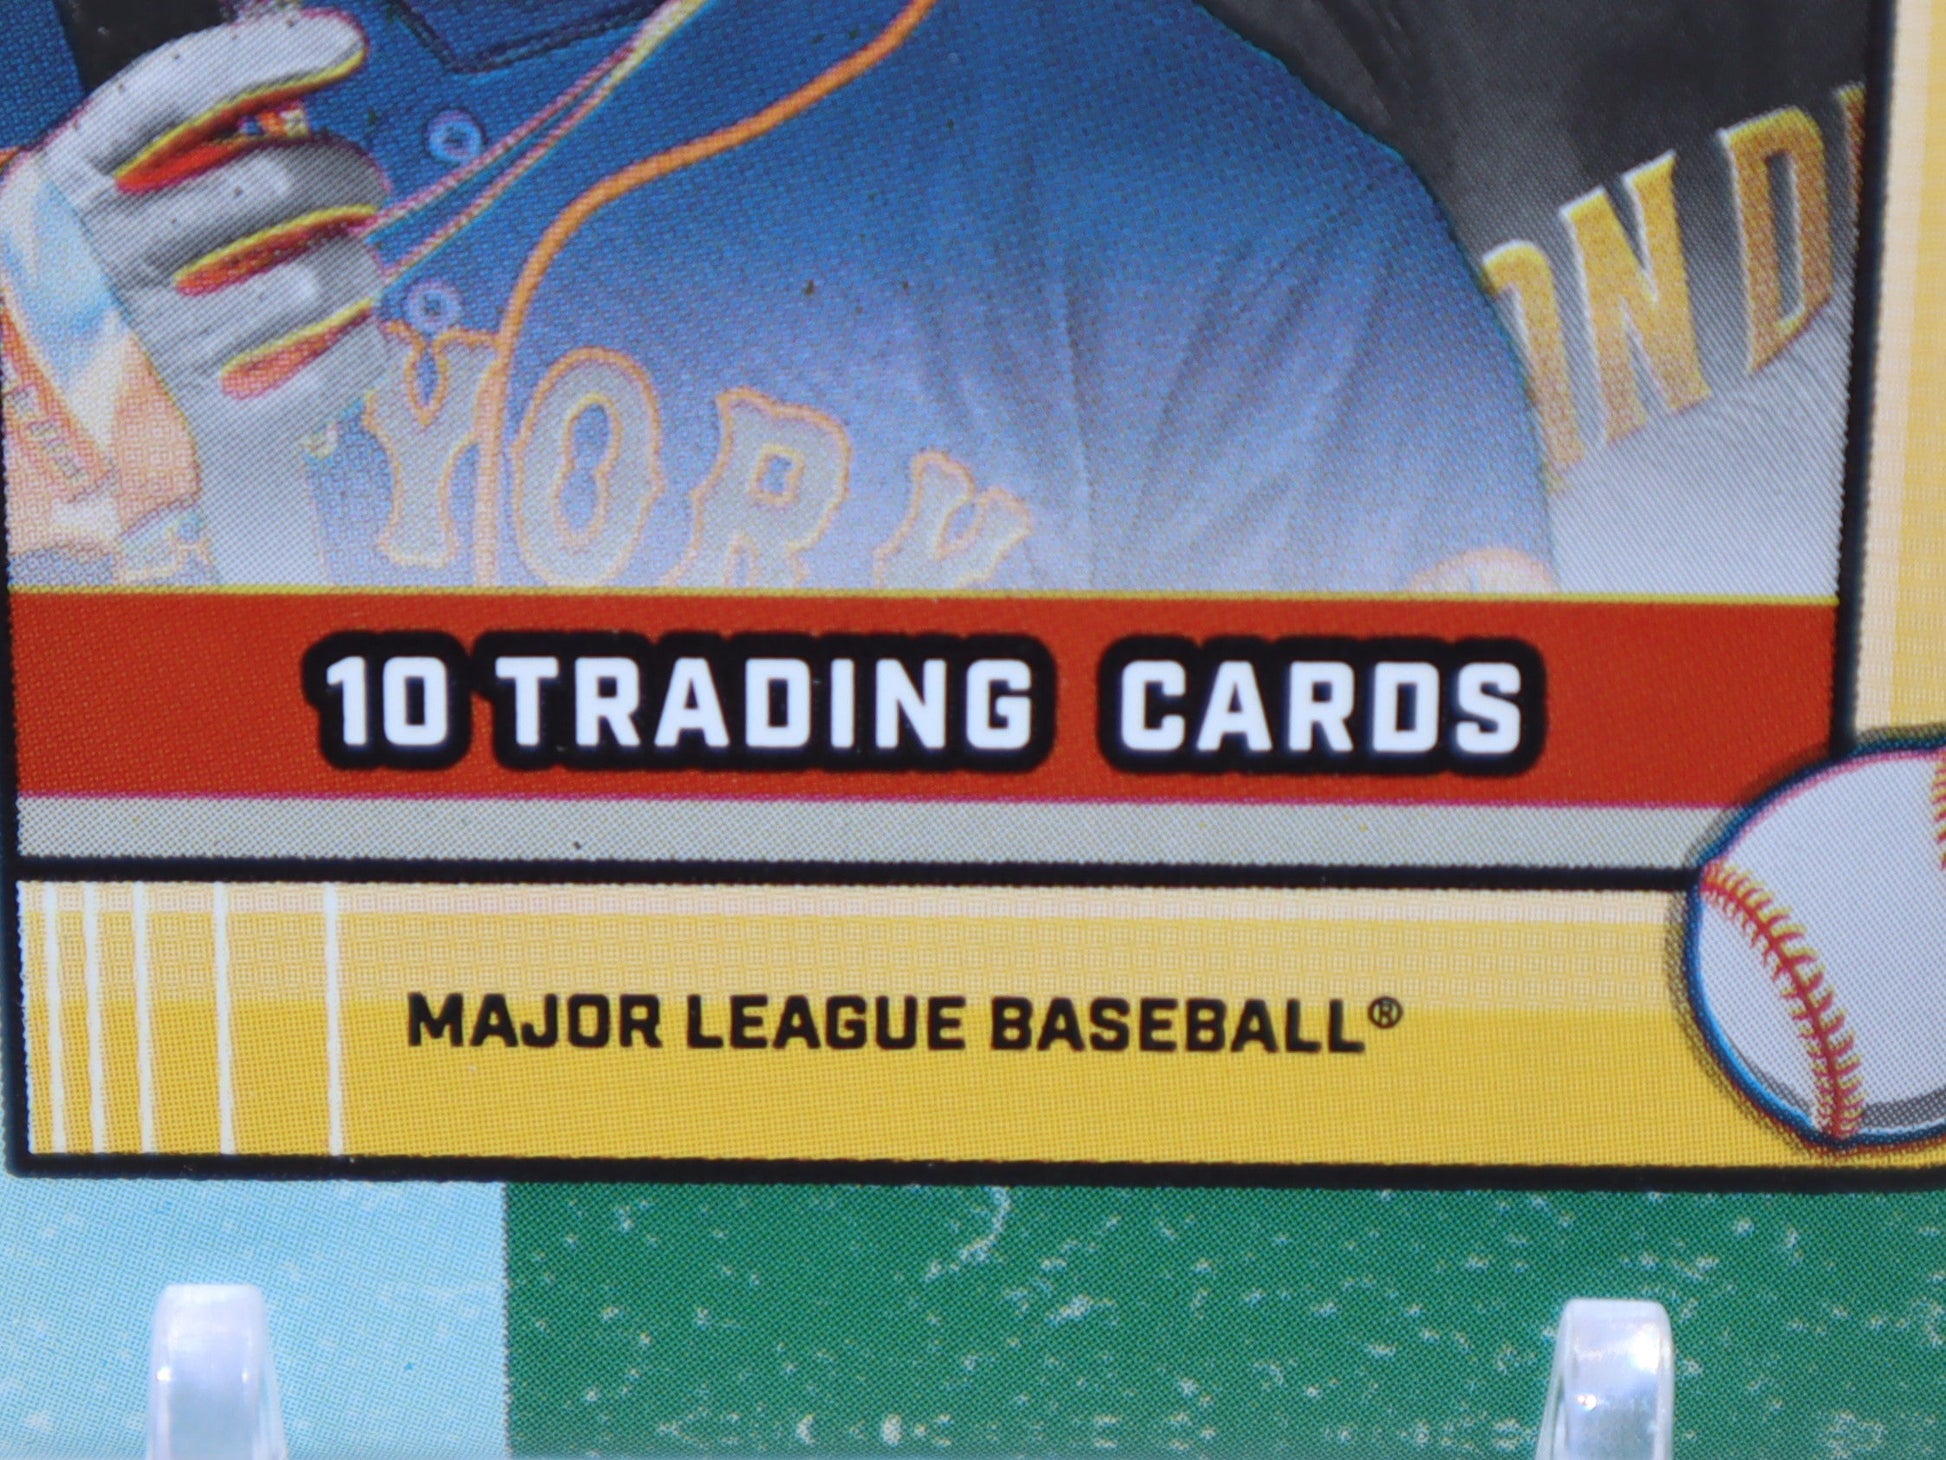 2021 Topps Big League Baseball Cards Blaster Box Wax Pack - Collectibles